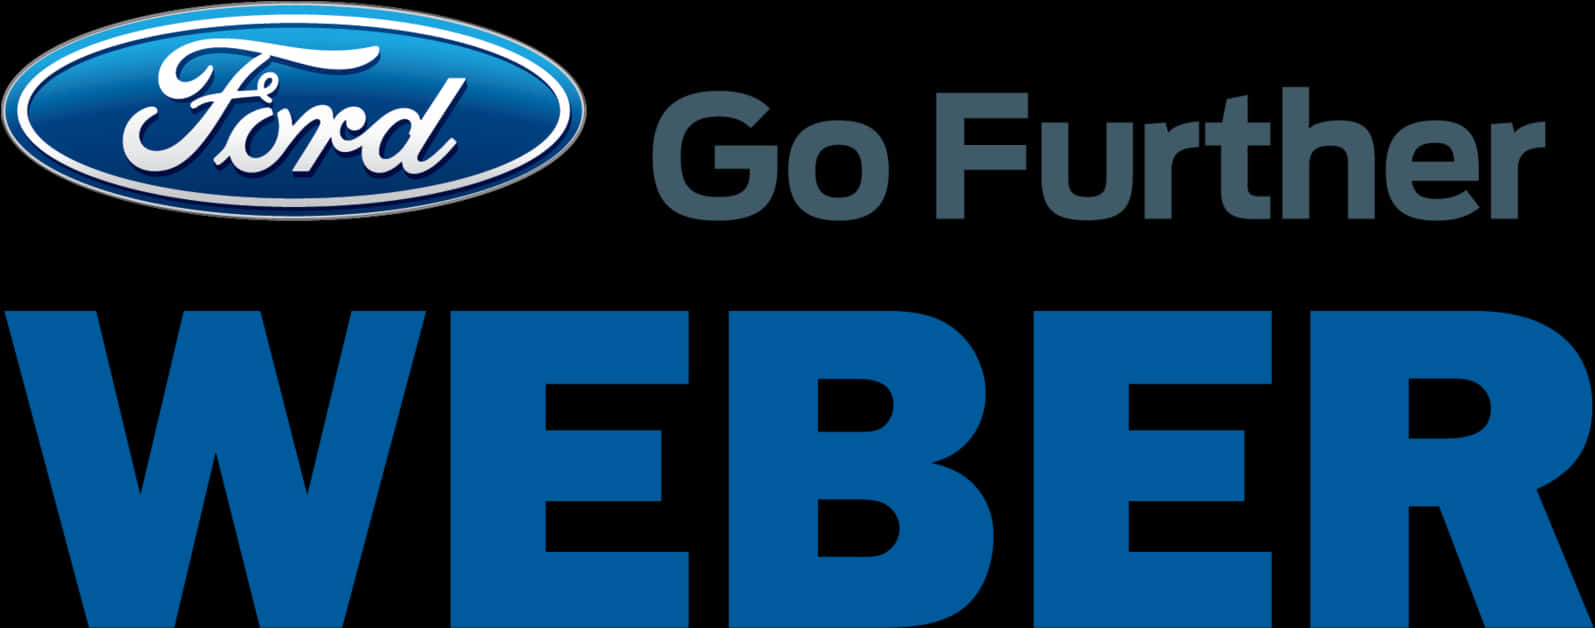 Ford Go Further Weber Branding PNG image